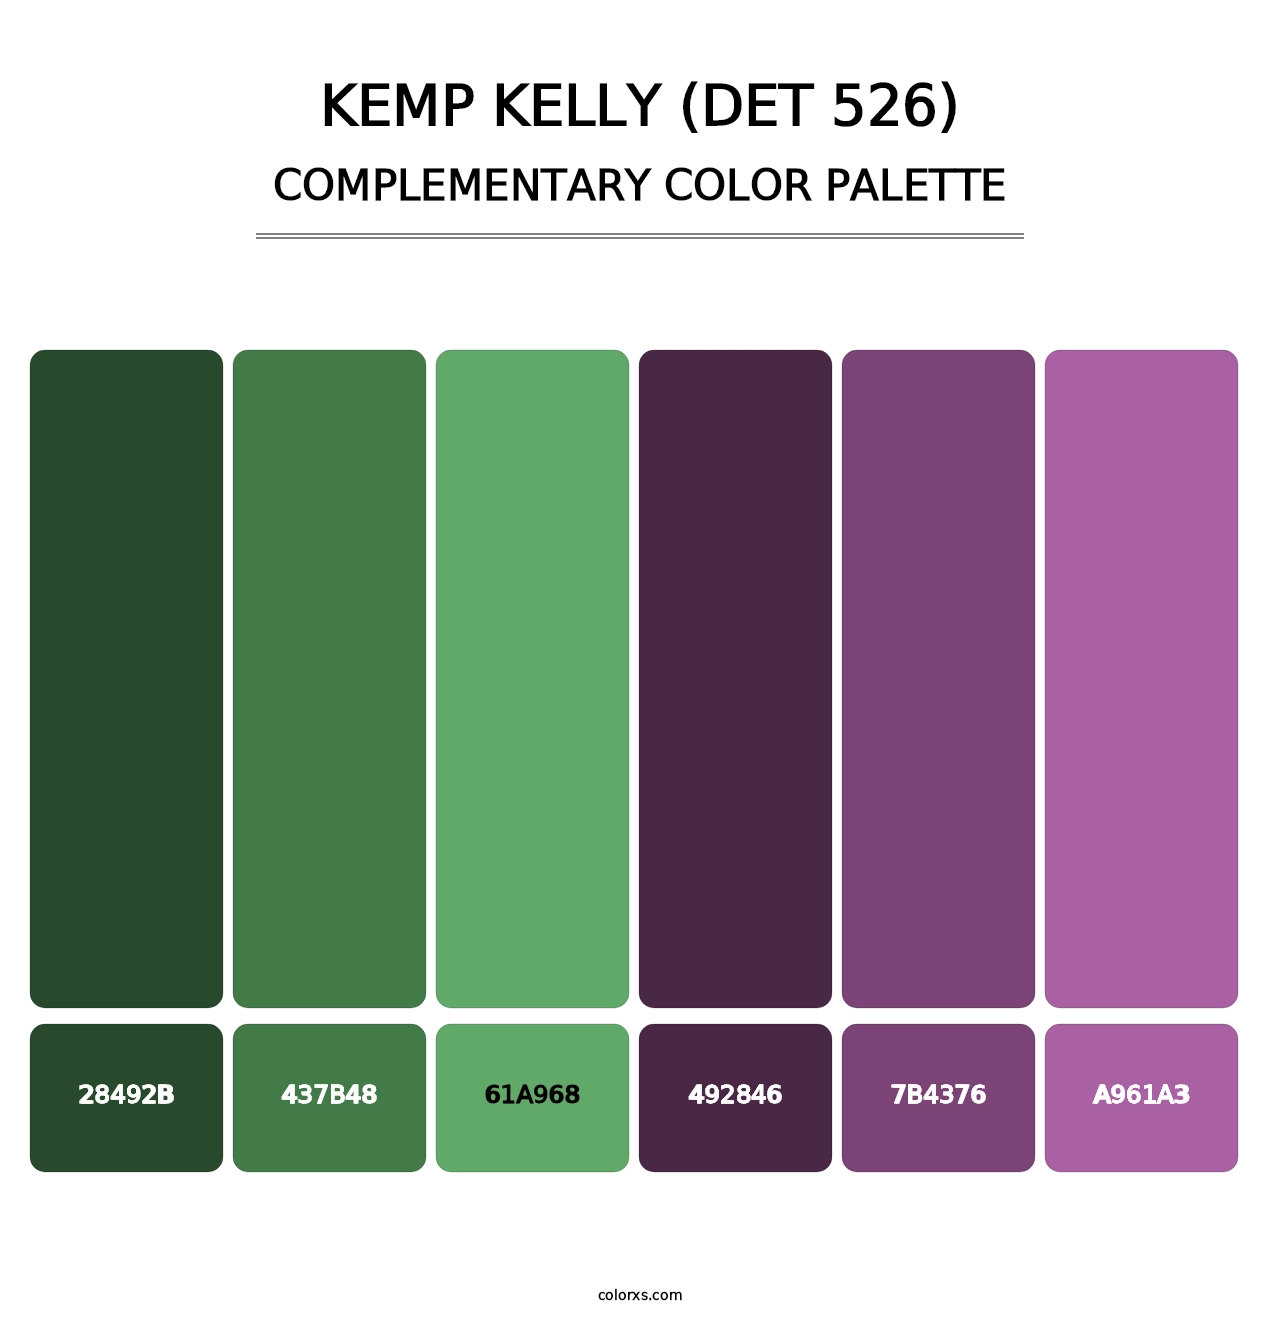 Kemp Kelly (DET 526) - Complementary Color Palette